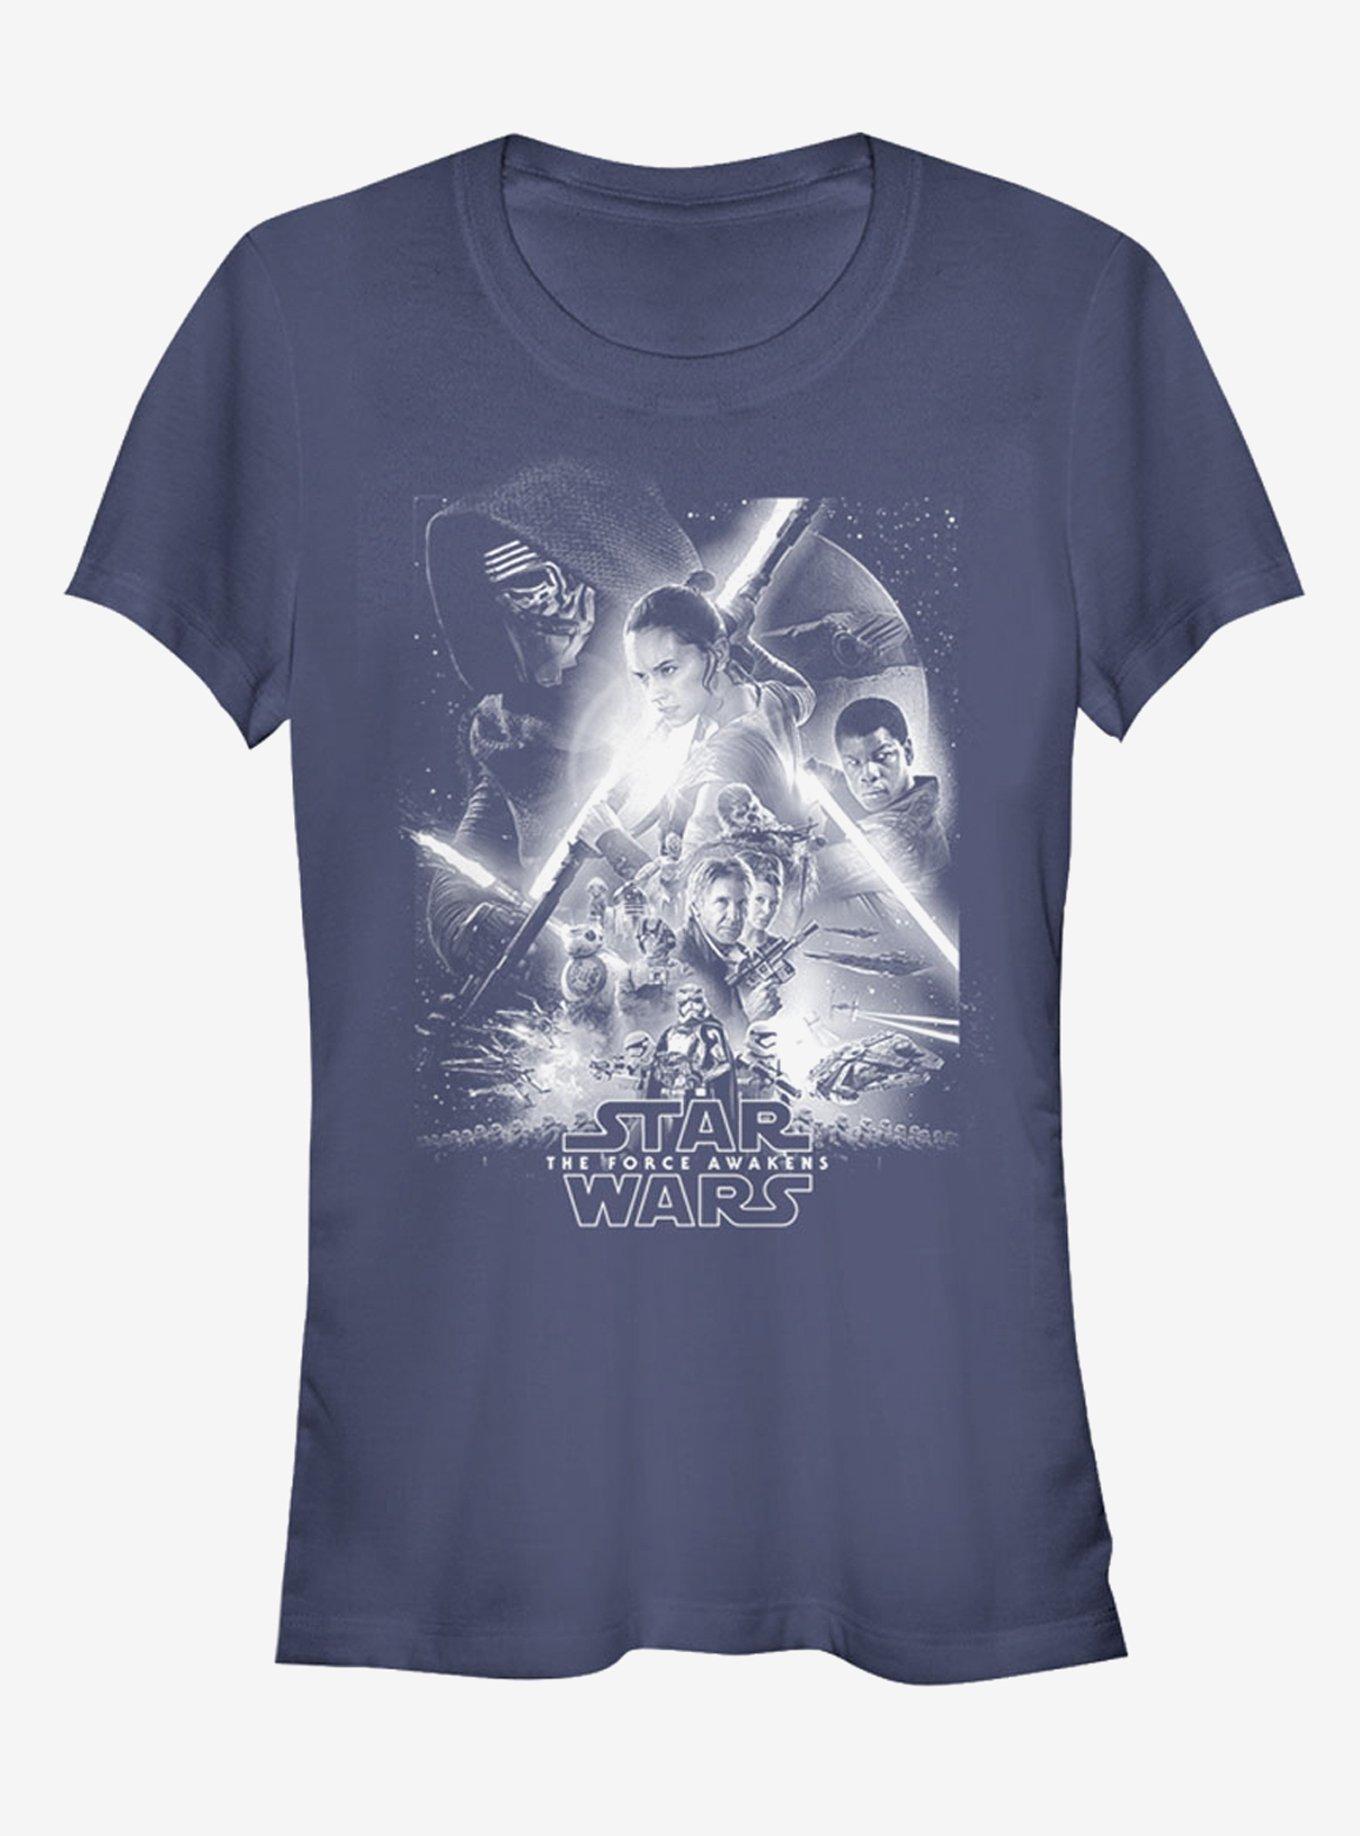 Star Wars Episode VII The Force Awakens Poster Girls T-Shirt, NAVY, hi-res